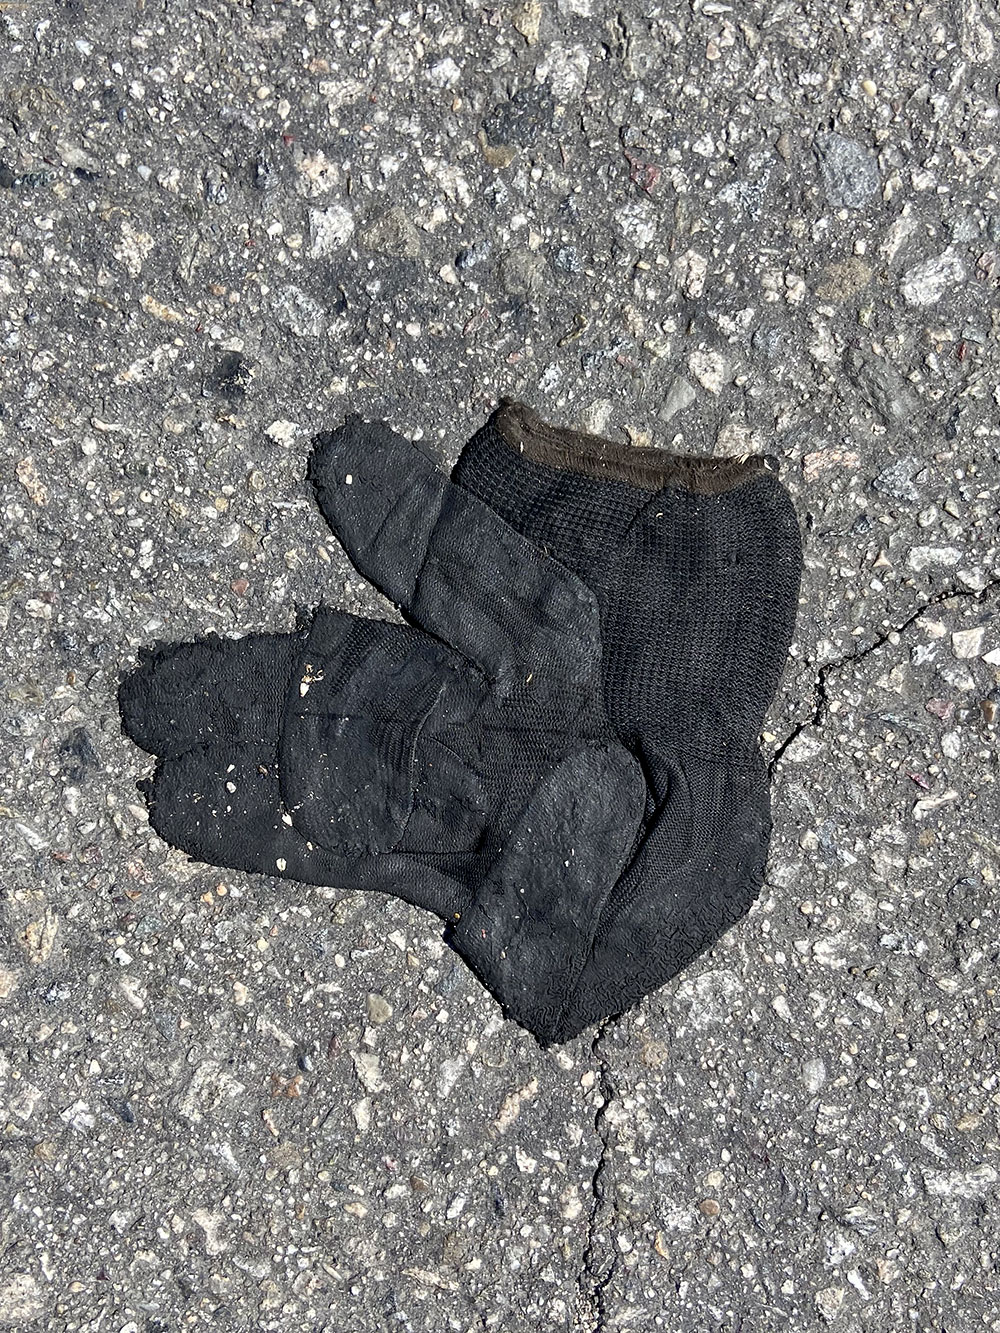 folded and flattened black gardening glove